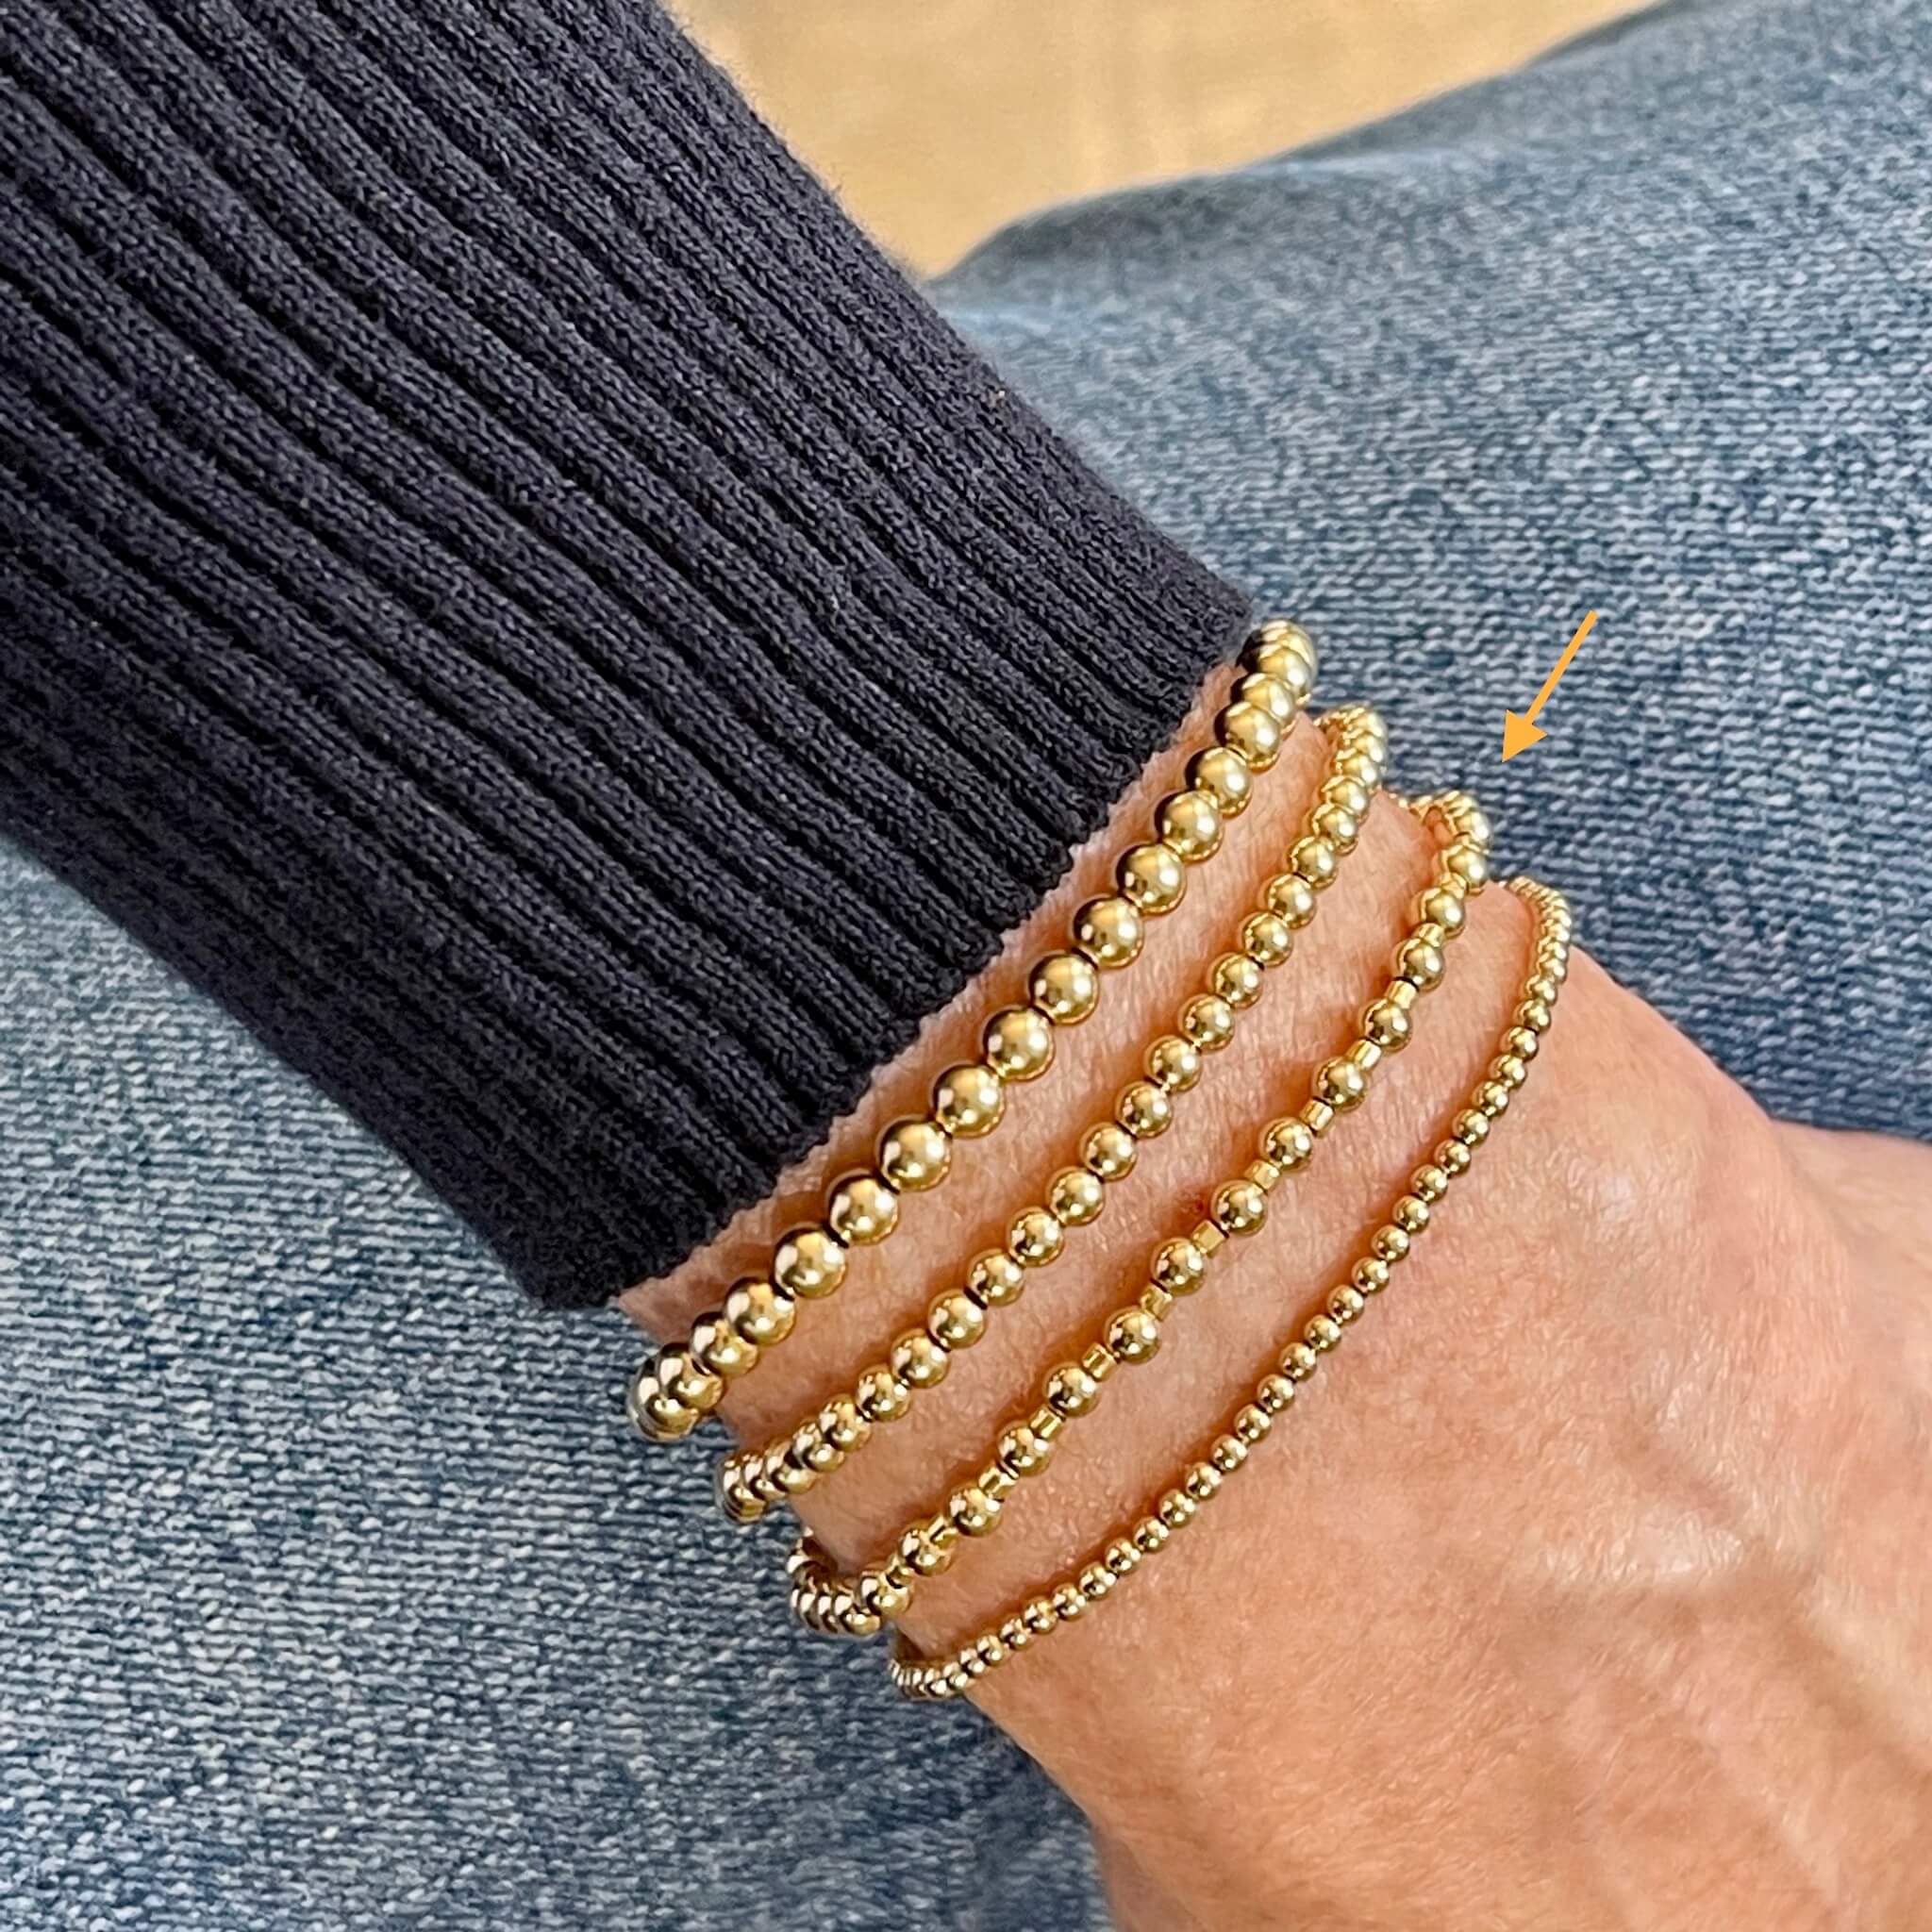 Addison Stretch Bracelet in Gold | Kendra Scott